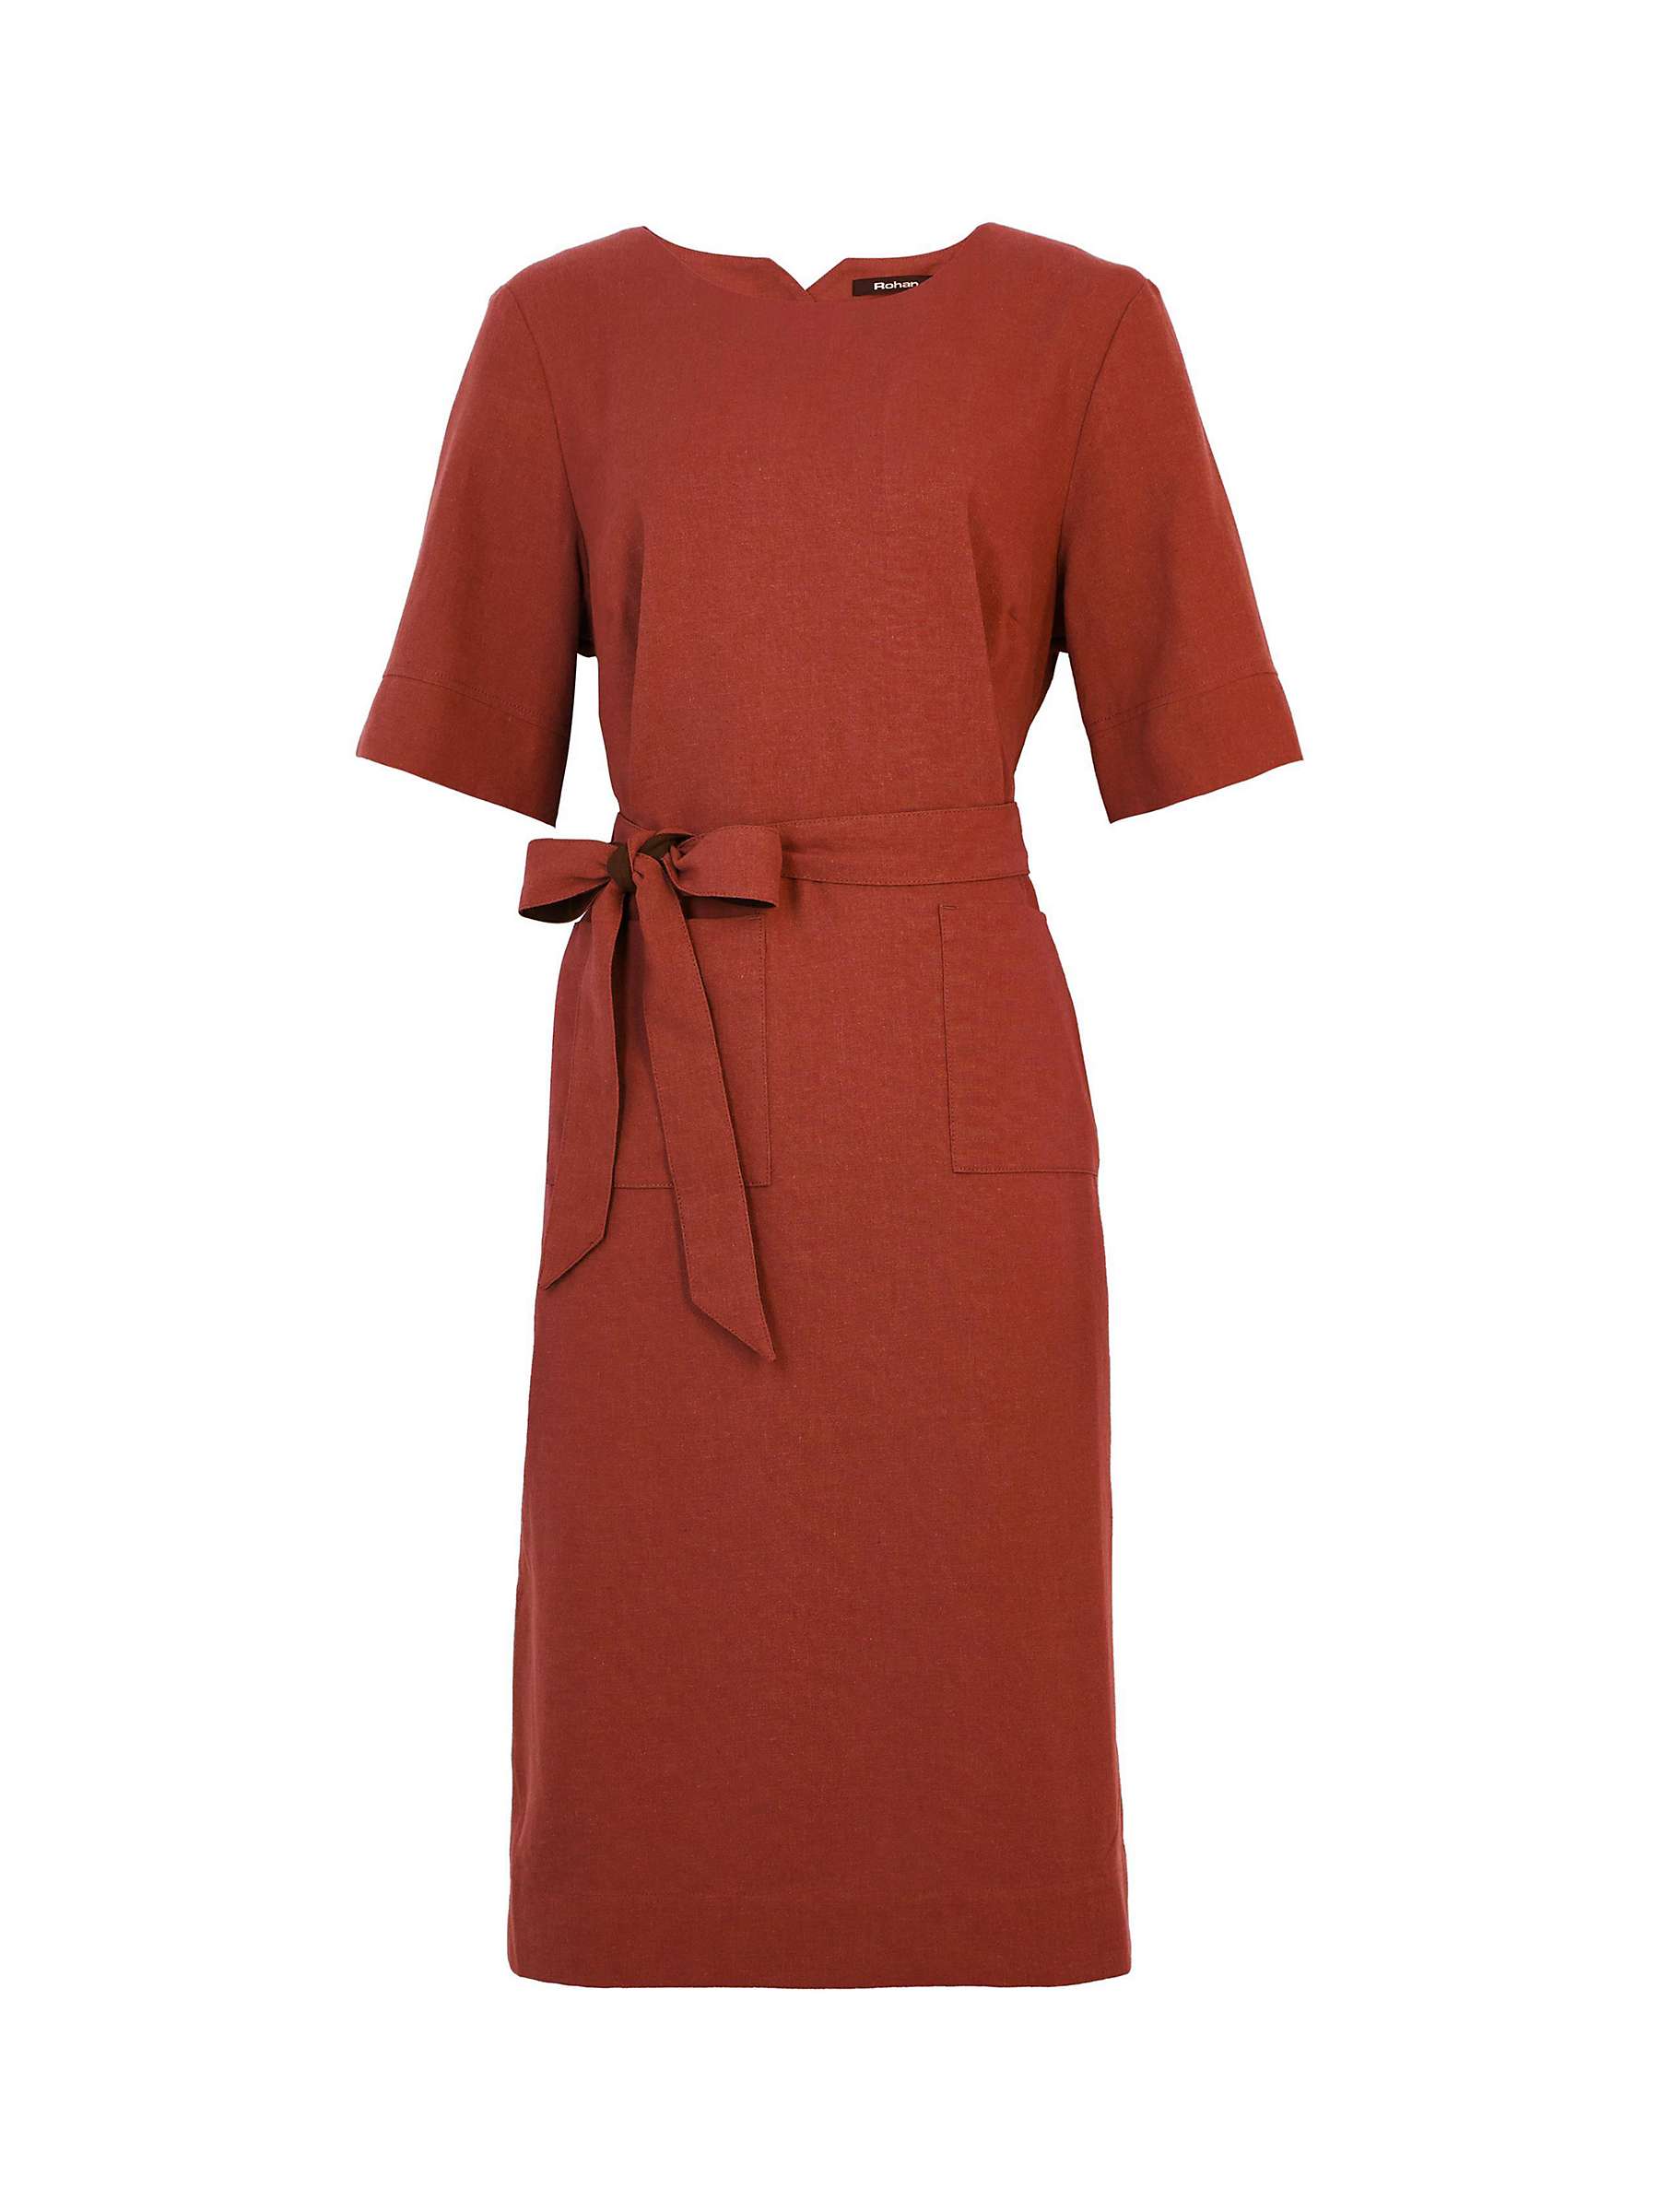 Buy Rohan Brisa Linen Blend Dress Online at johnlewis.com